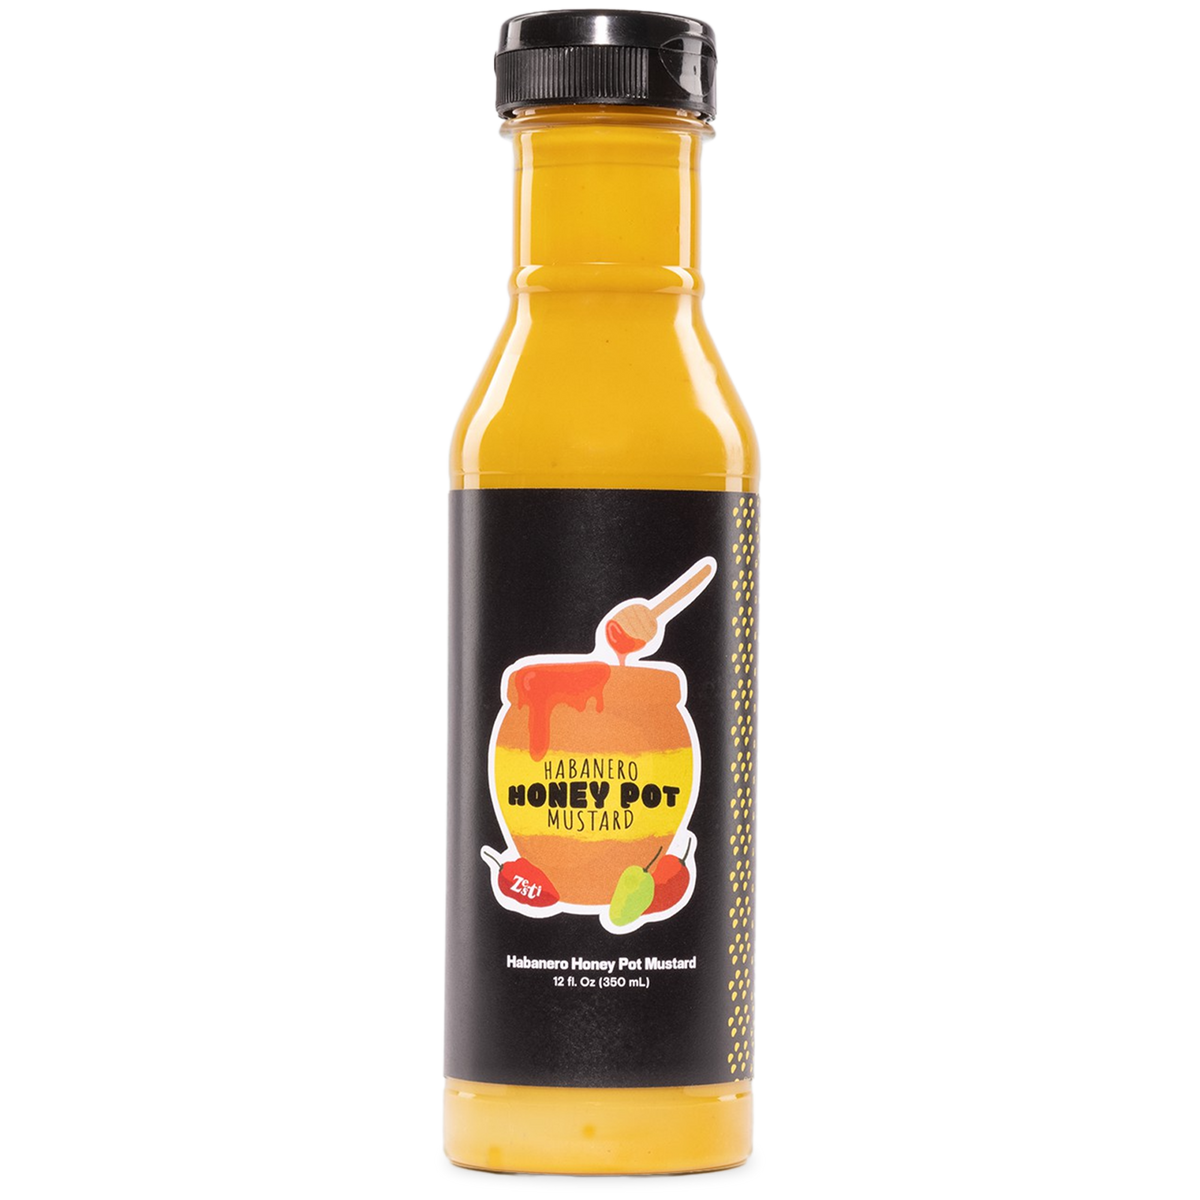 Habanero Honey Pot Mustard